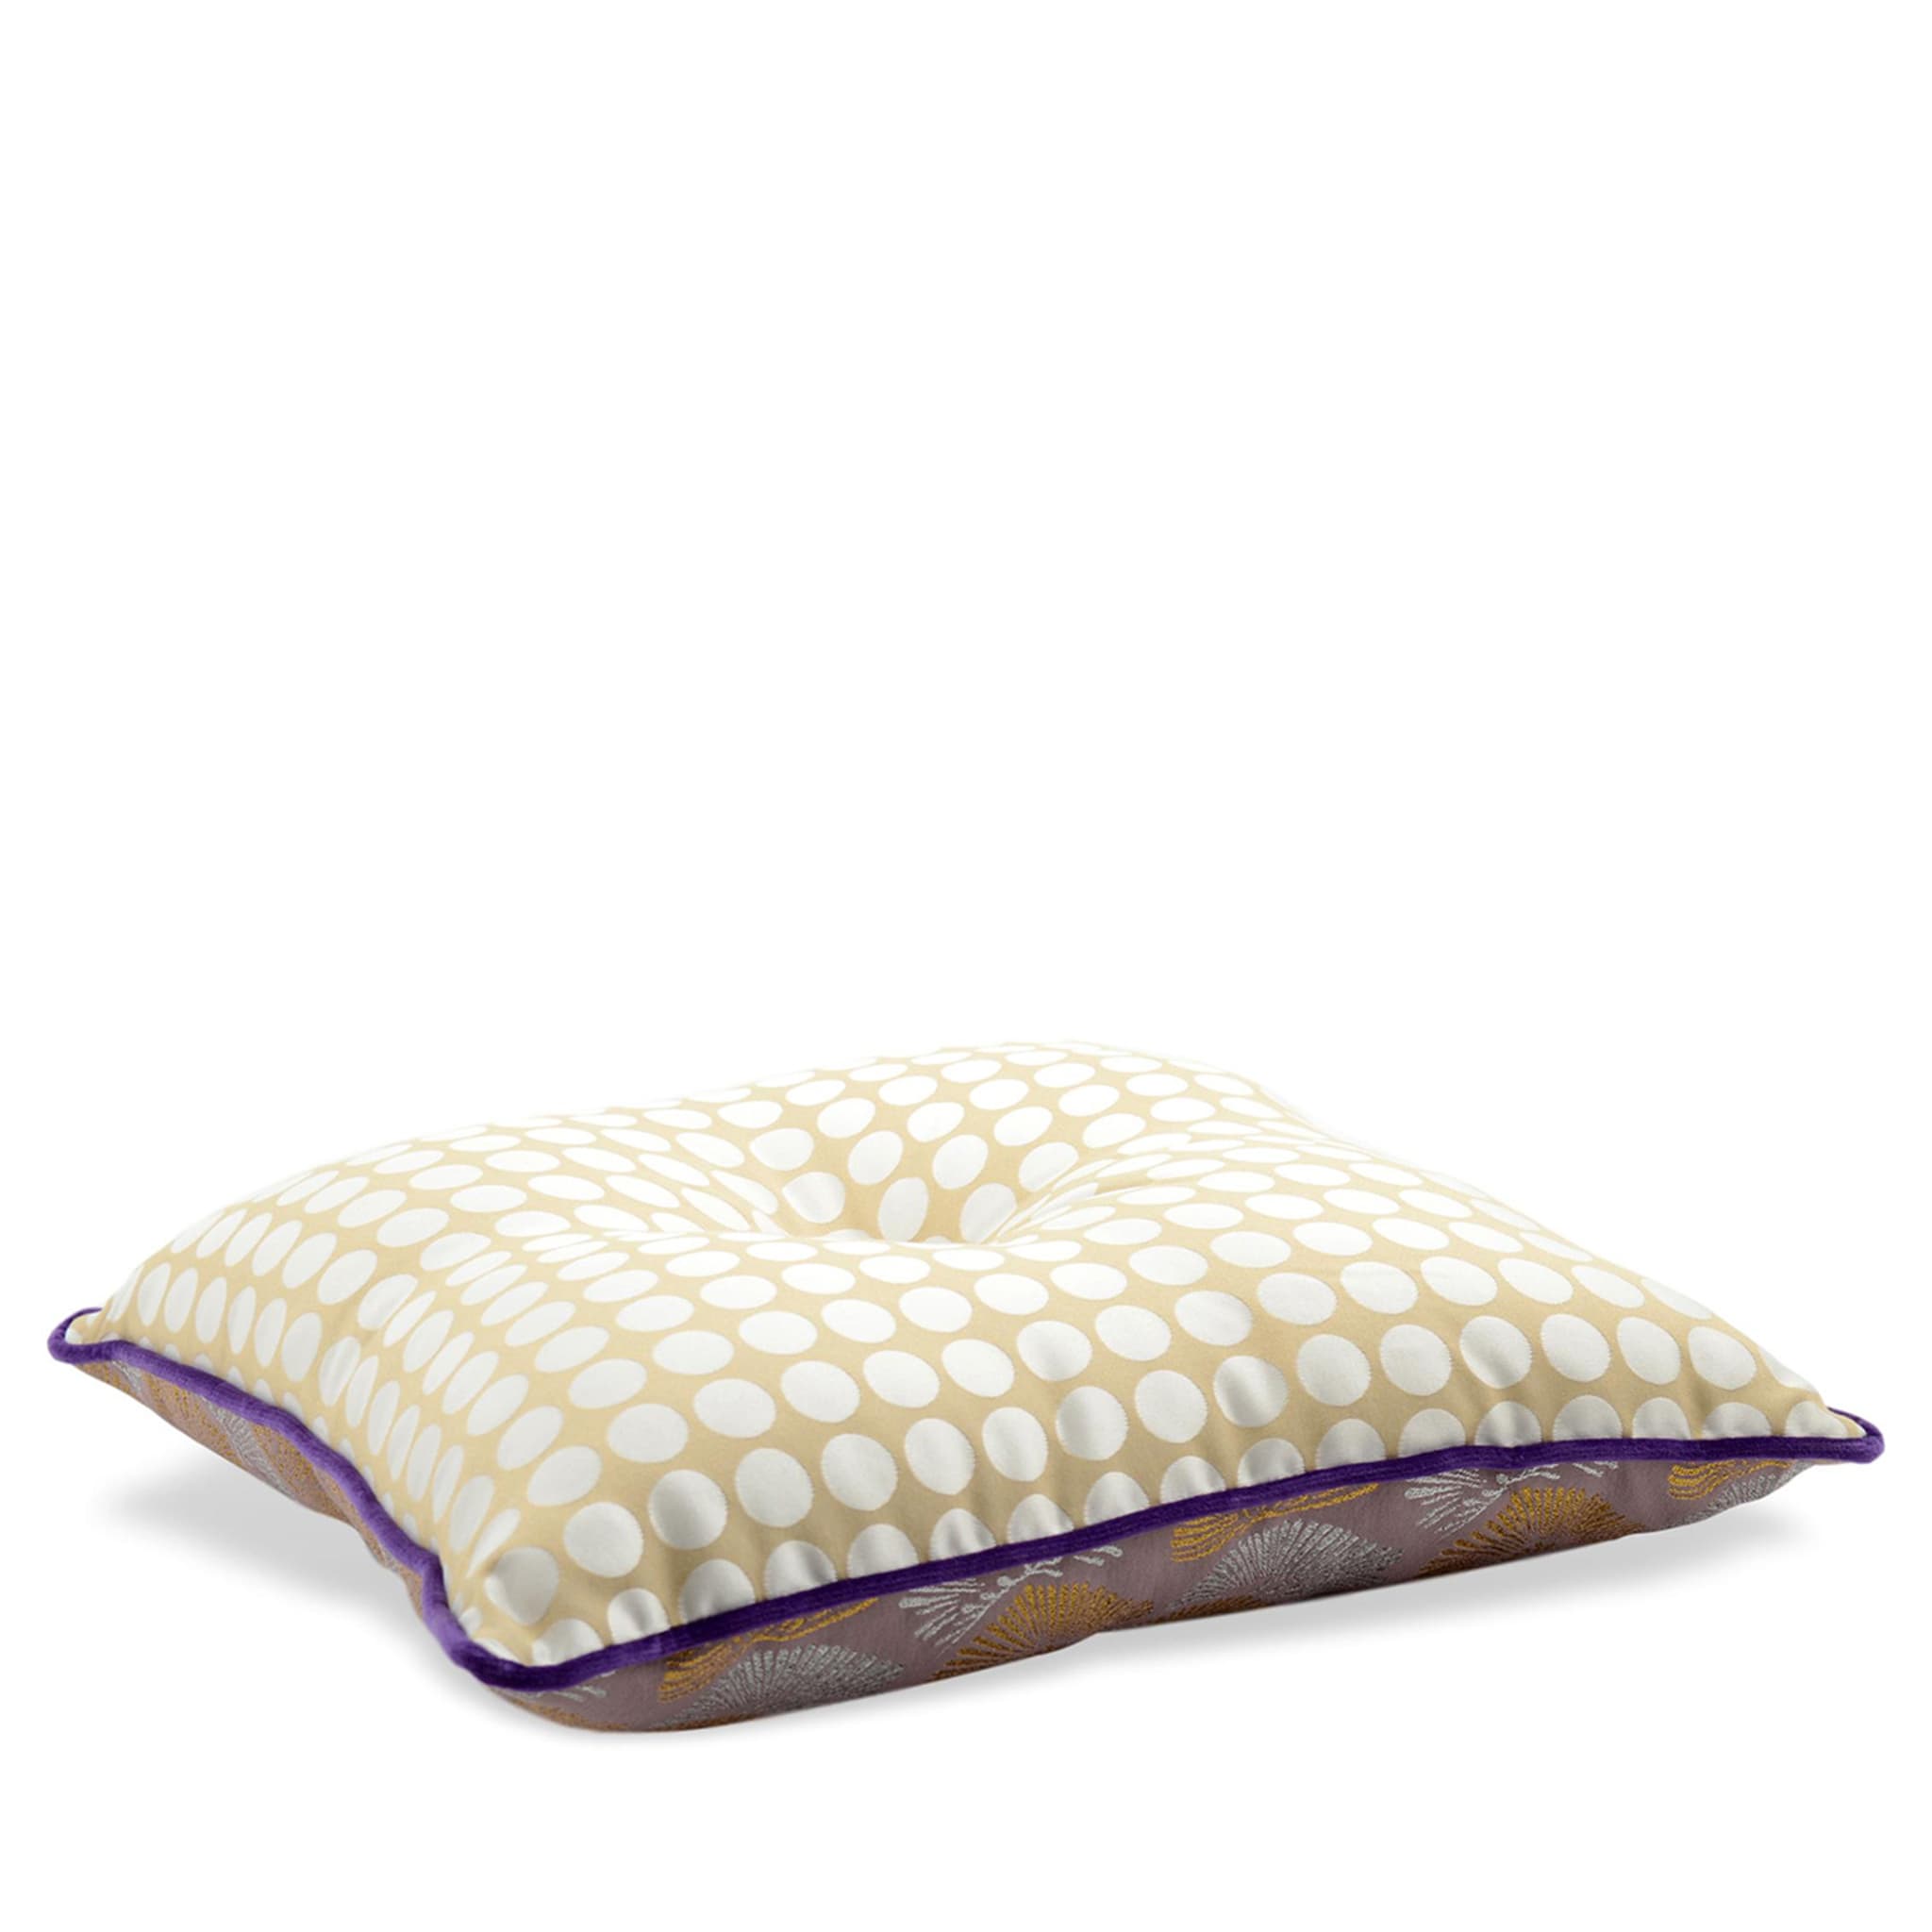 Beige Carrè Cushion in Polka Dots Jacquard Fabric - Alternative view 1